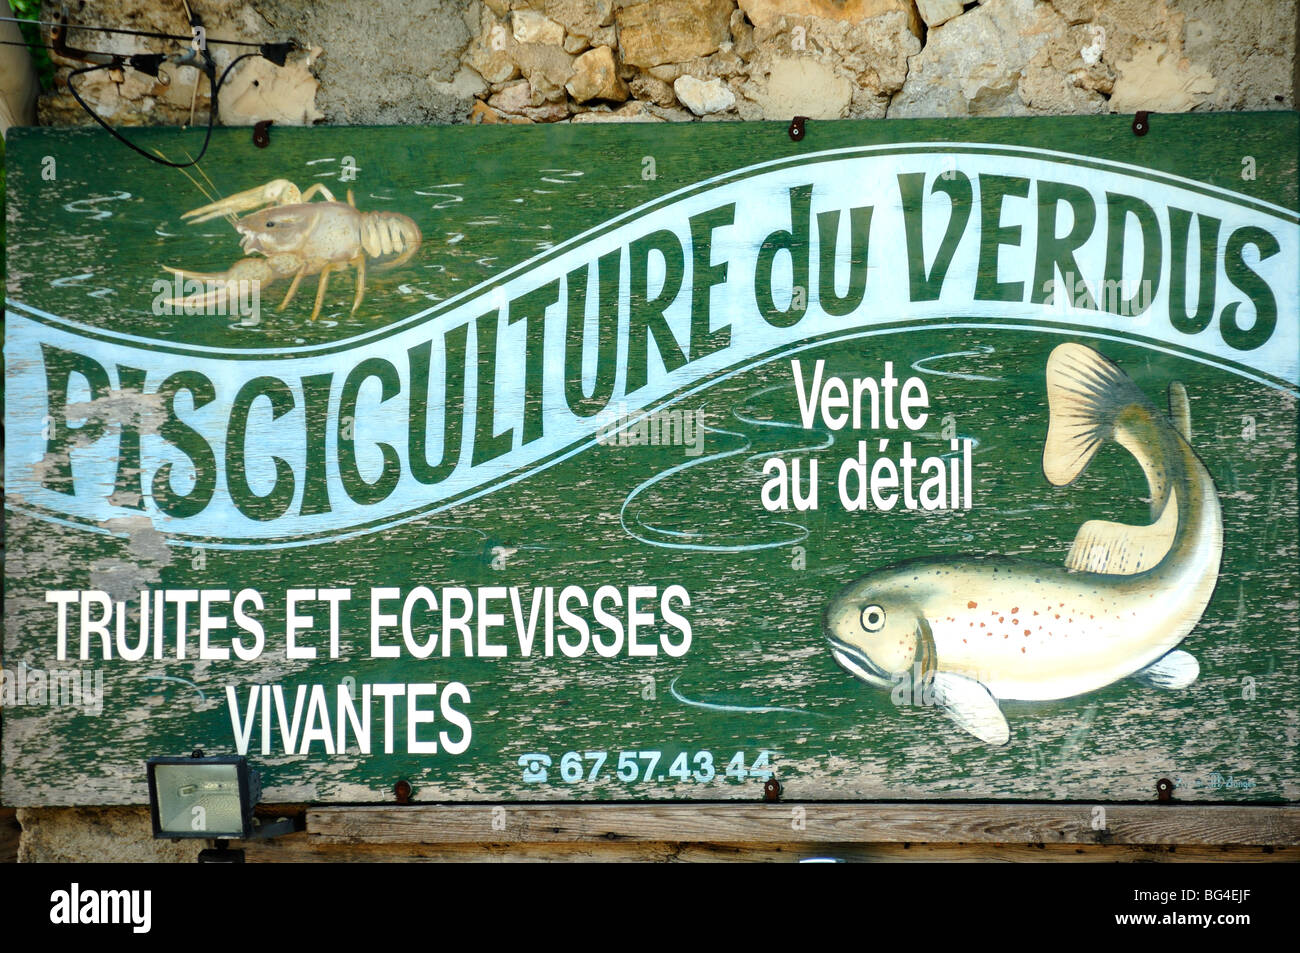 Old Painted Sign Advertising Aquaculture or 'Pisciculture' for Trout & Crayfish on Verdus River, Saint Guilhem le Désert, Hérault, France Stock Photo